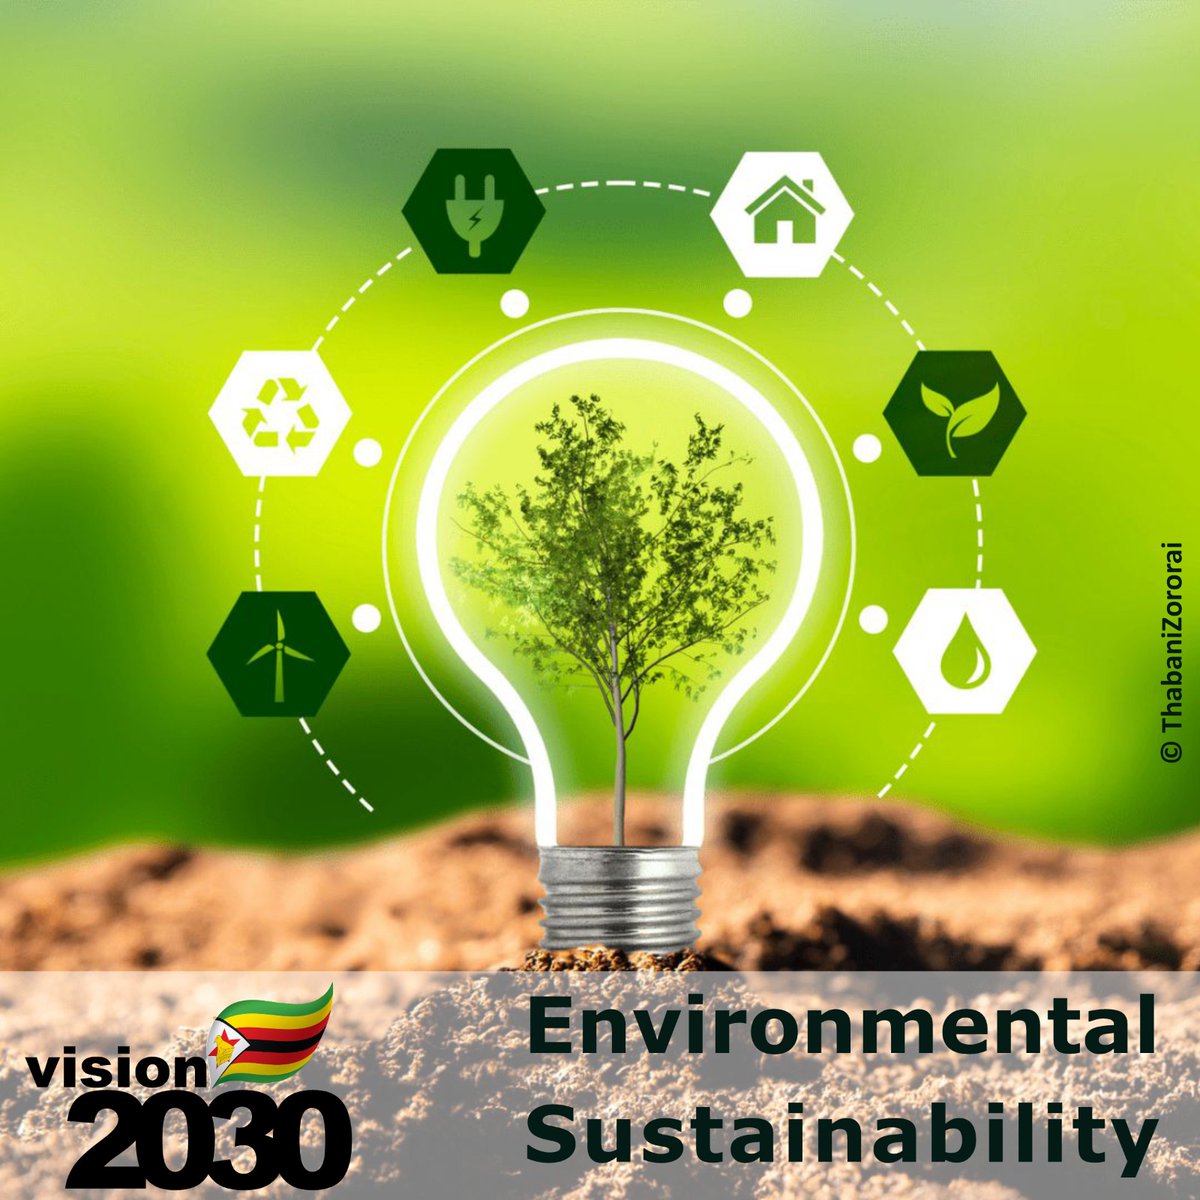 Zimbabwe goes green!

@edmnangagwa Administration adopts green energy, aligning with UN-Energy's SDG 7: affordable, reliable, sustainable, and modern energy for all by 2030!

#GoGreen #Vision2030 #SDG7 #SustainableEnergy #RenewableEnergy